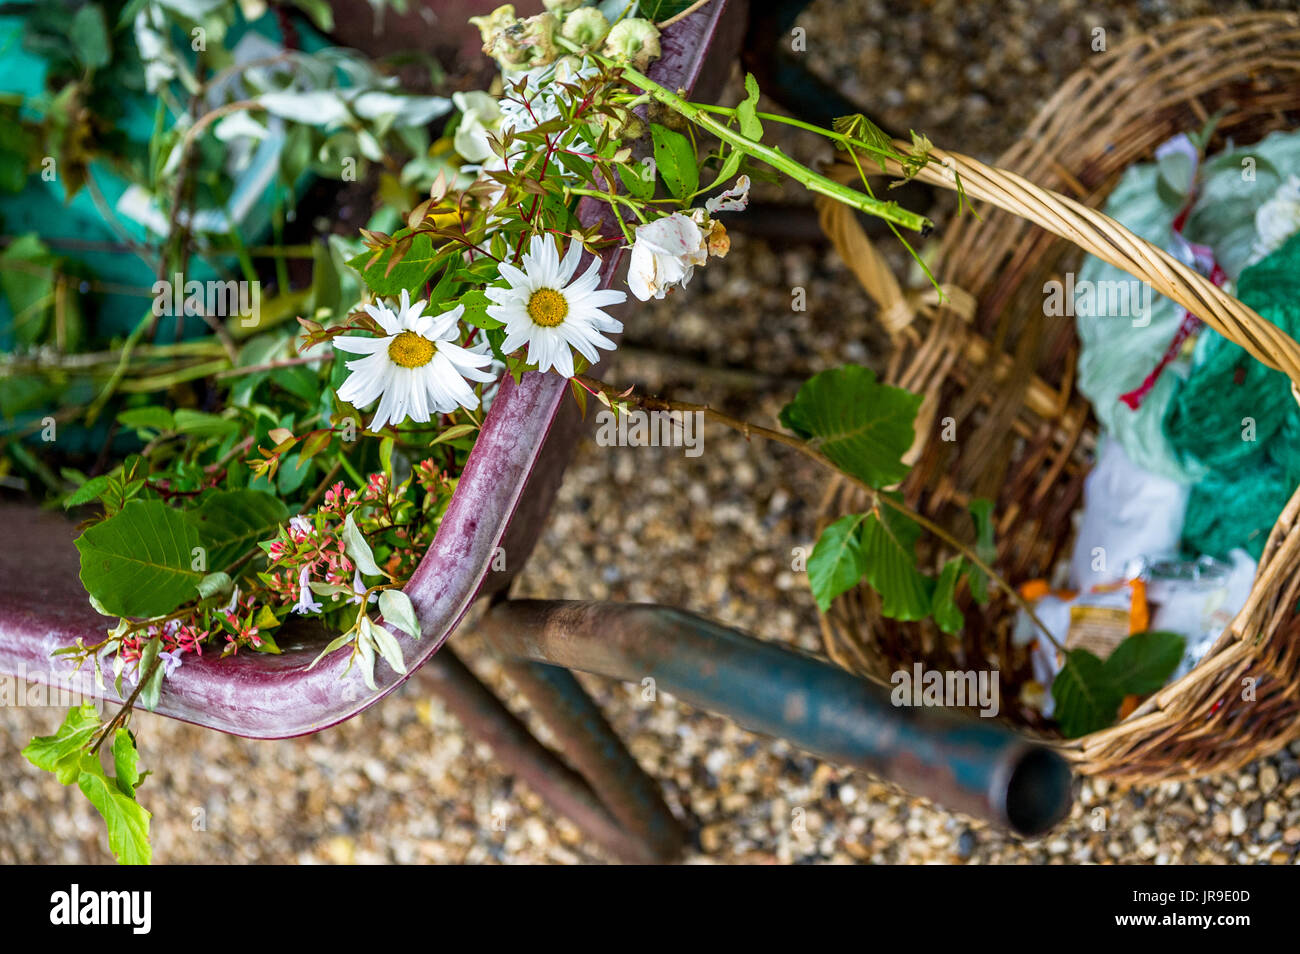 Cut Oxeye daisies in a wheel barrow. Stock Photo